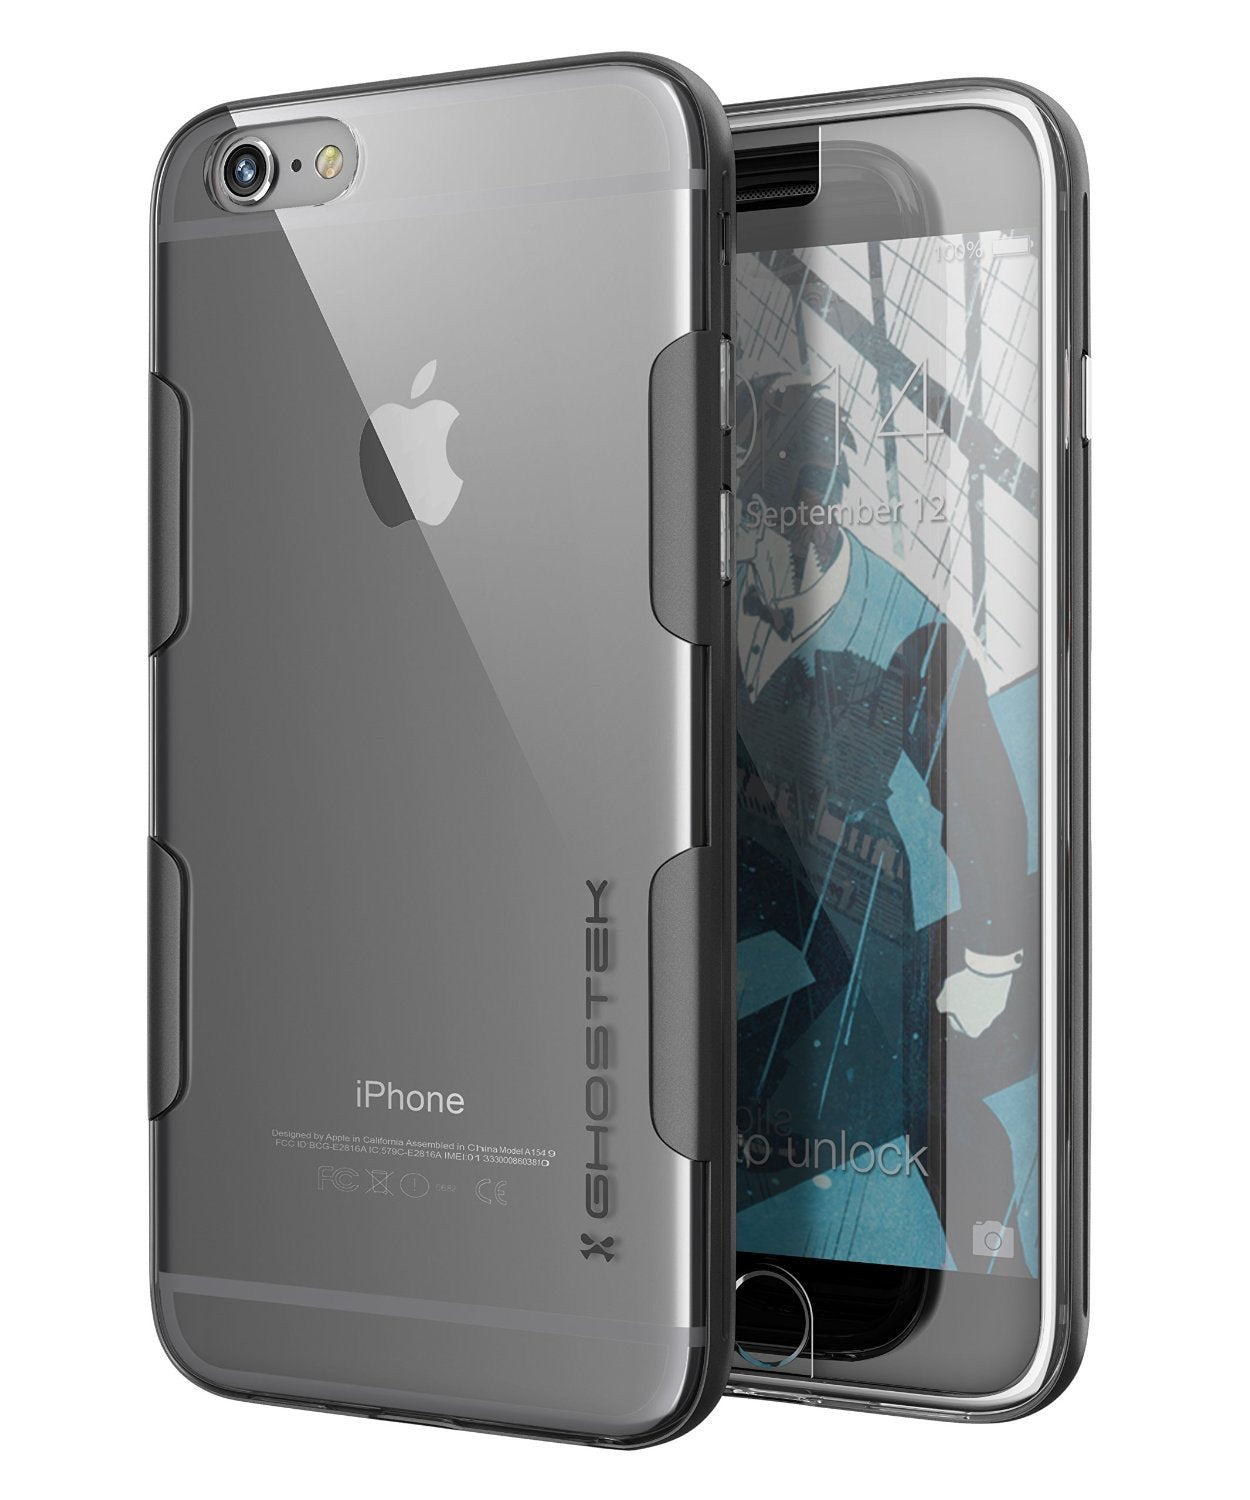 iPhone 6s Plus Case Space Grey Ghostek Cloak, Slim Protective w/ Tempered Glass | Lifetime Warranty - PunkCase NZ